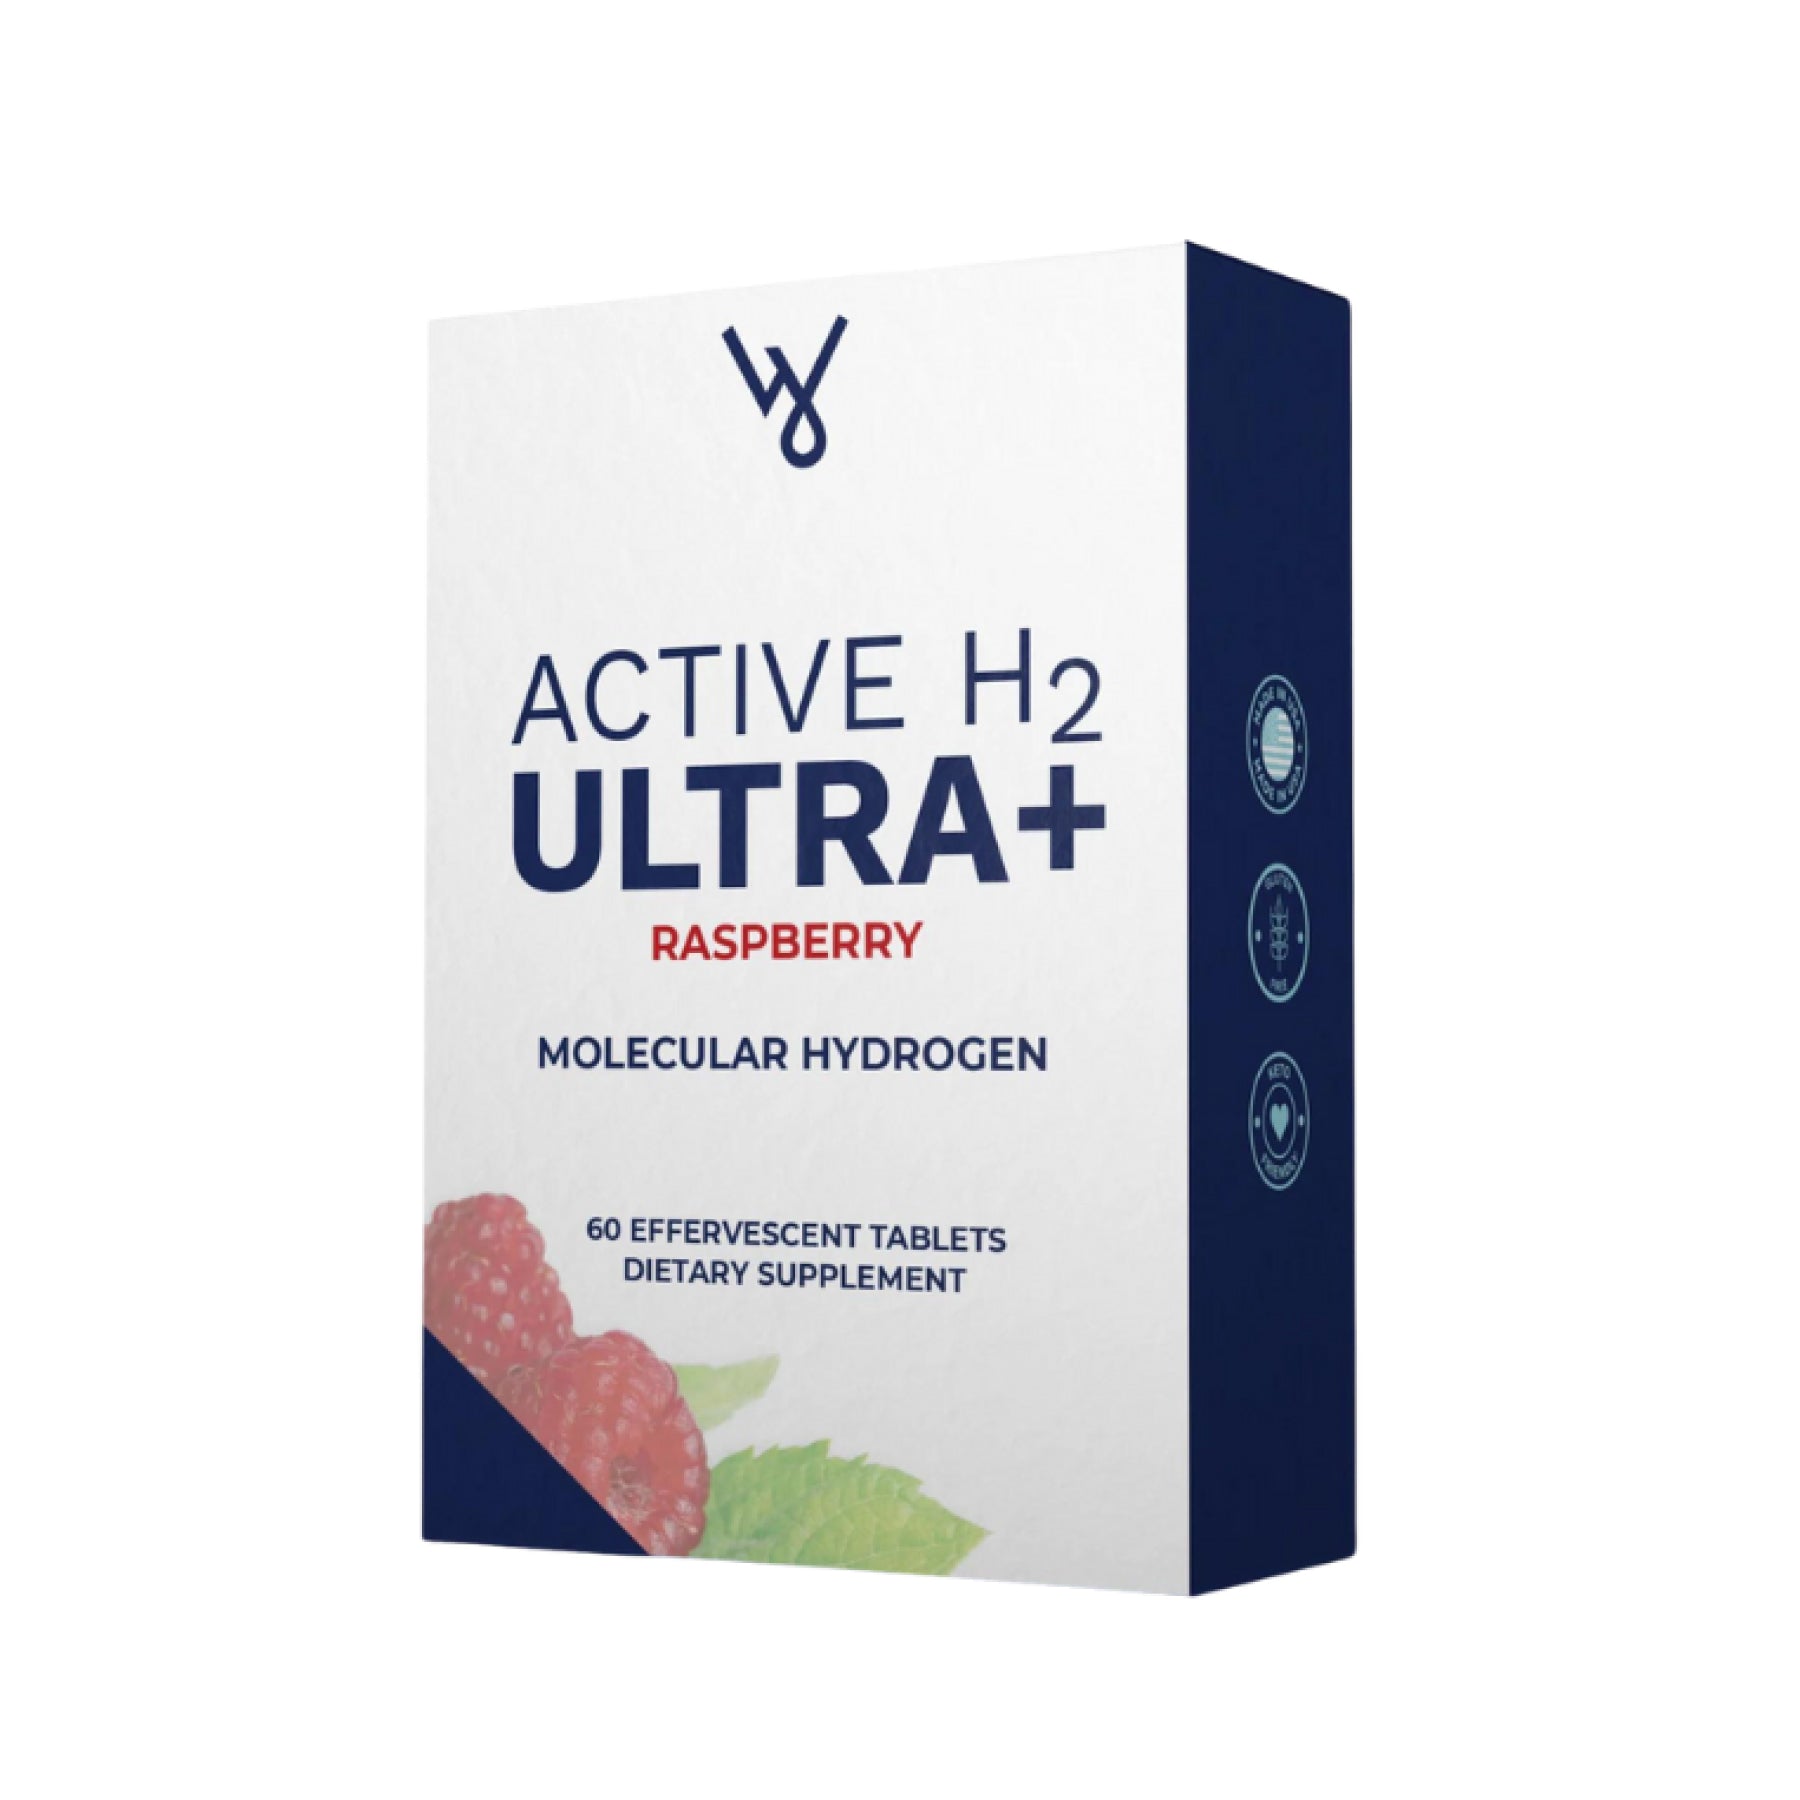 Active H2 ULTRA+ - Raspberry